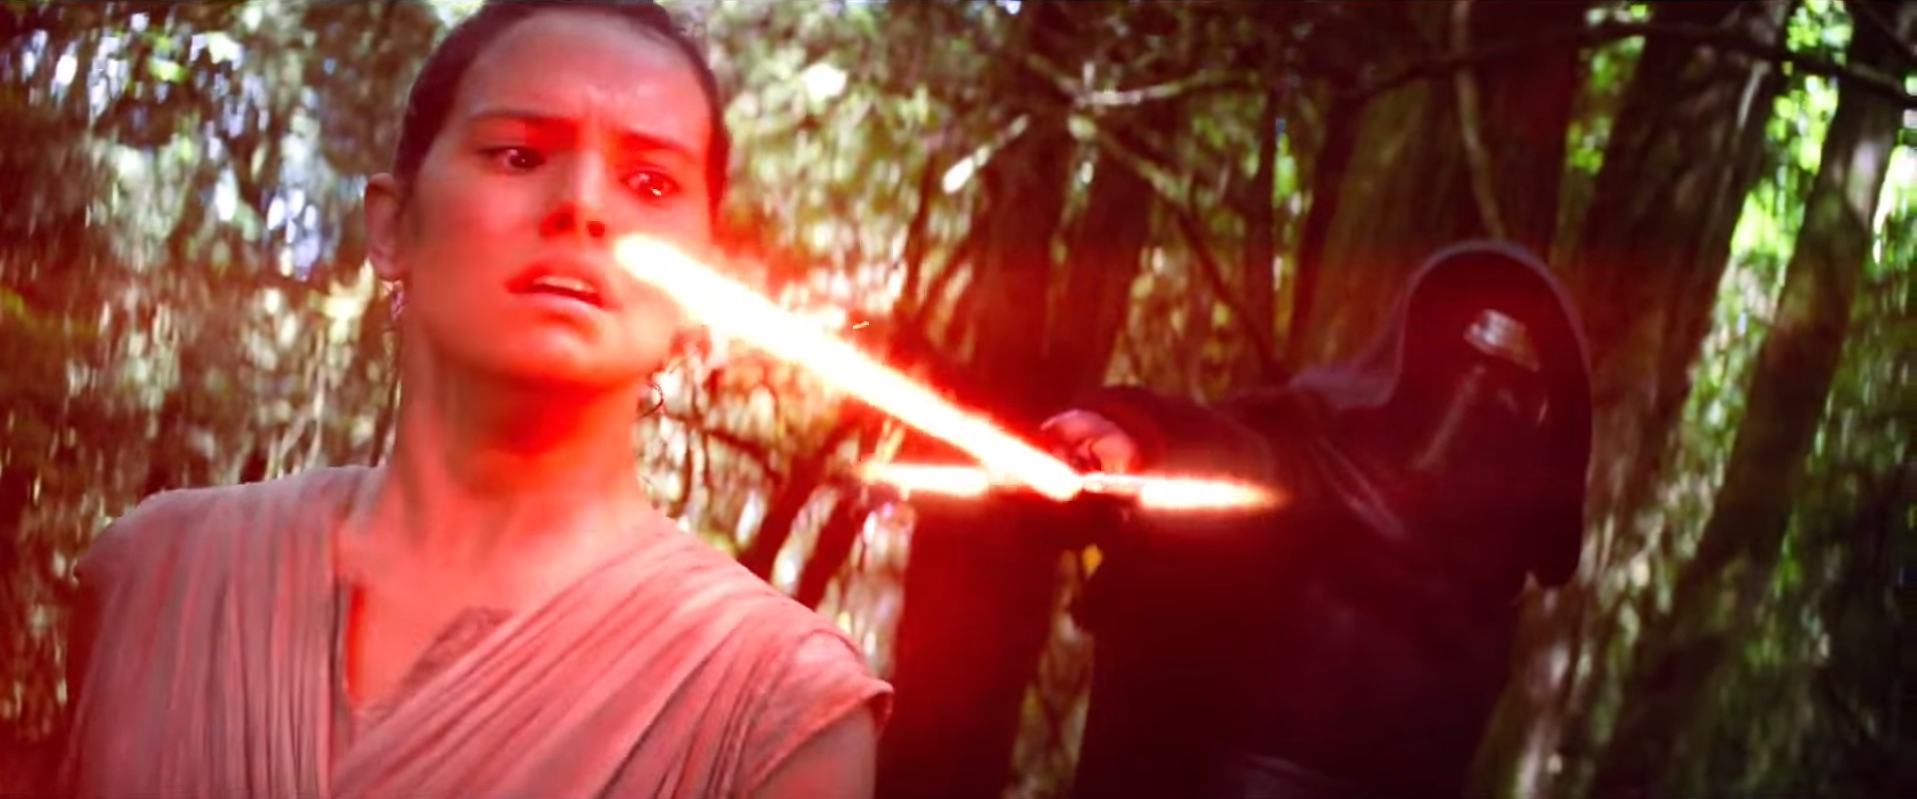 Star Wars Trailer Analysis  - The Force Awakens Japanese Trailer